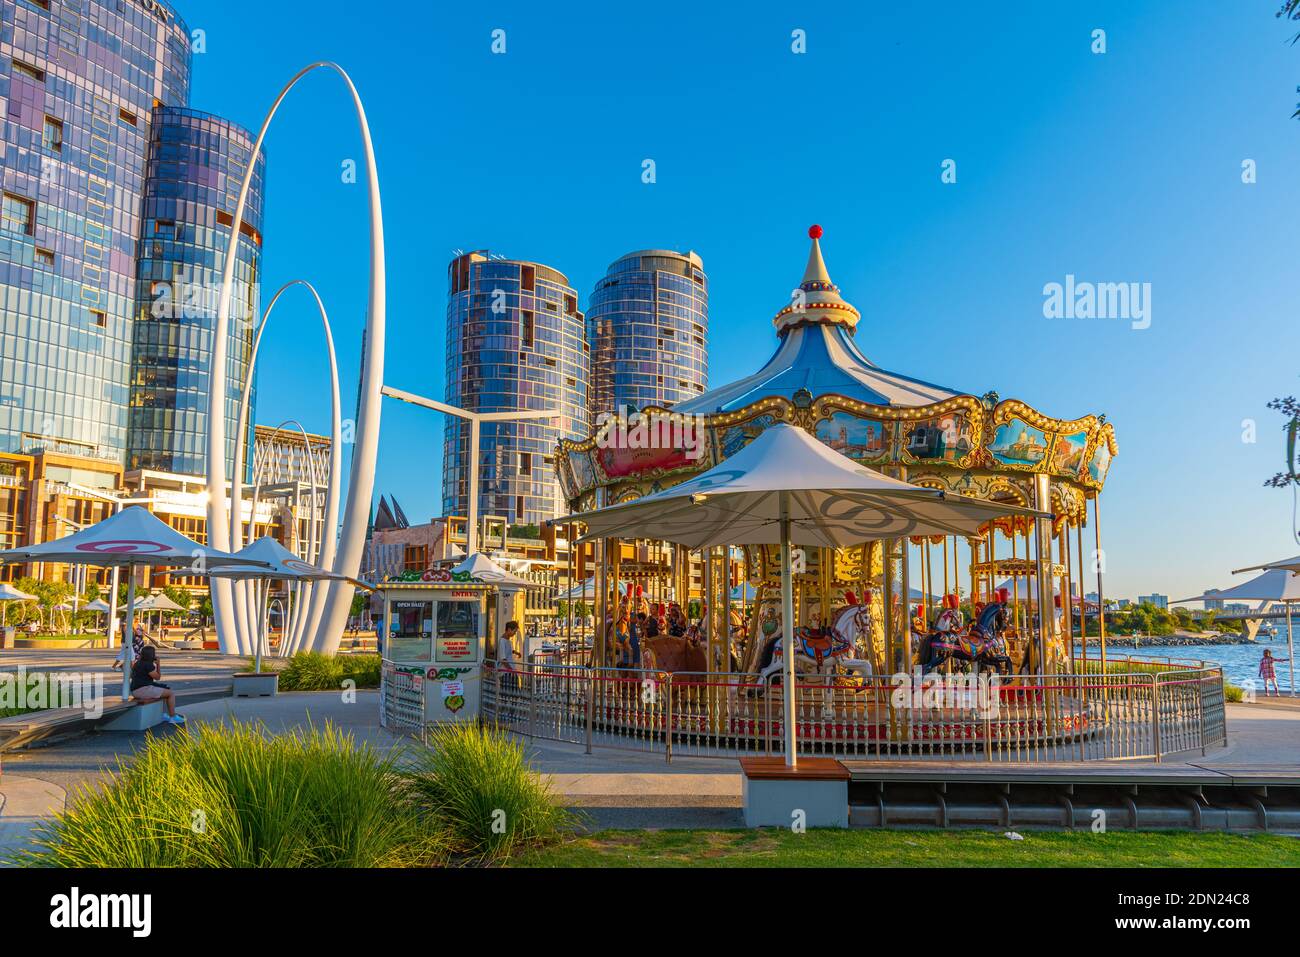 PERTH, AUSTRALIA, JANUARY 18, 2020: Carousel at Elizabeth quay in Perth, Australia Stock Photo